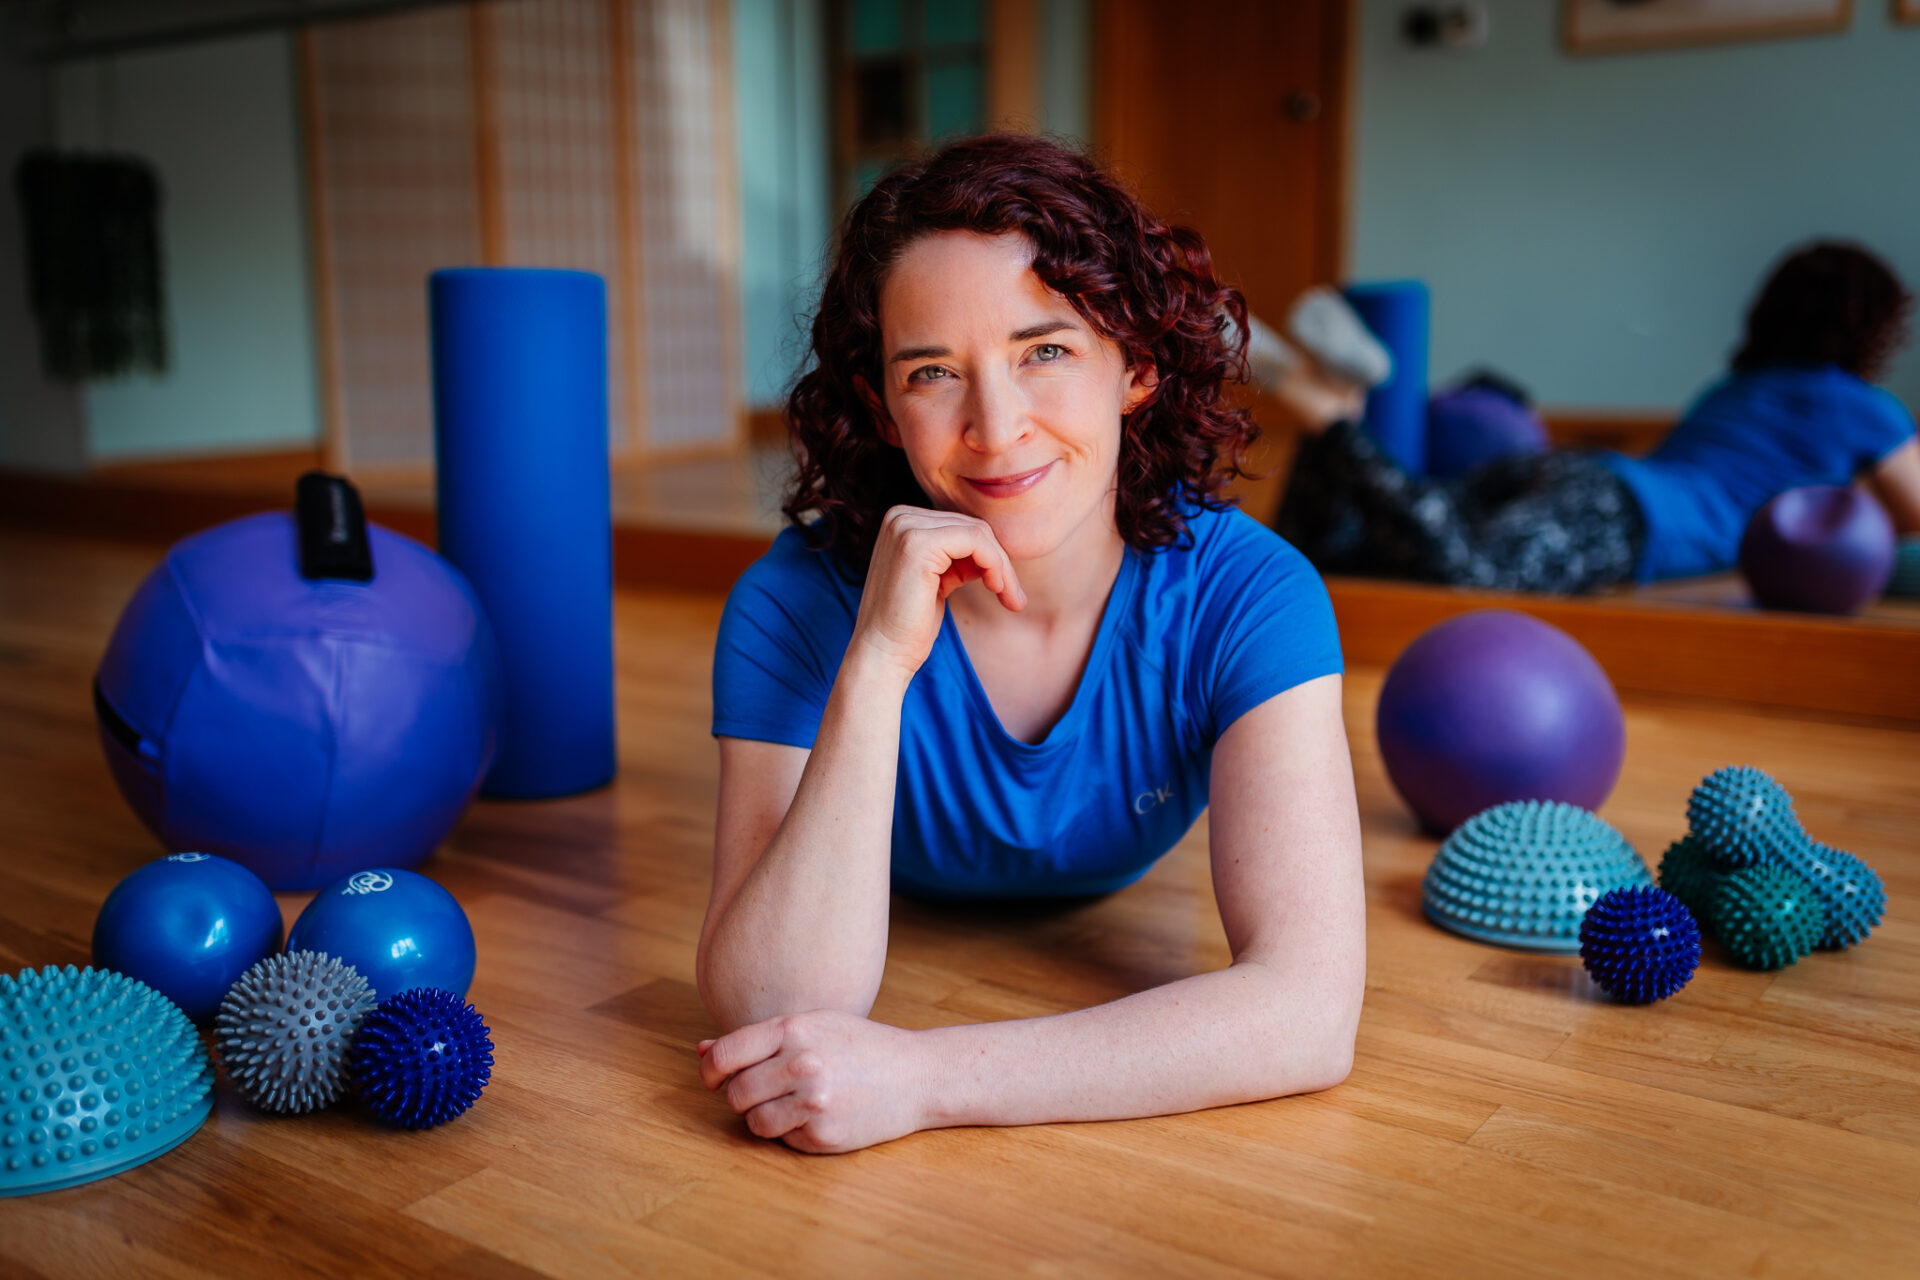 Emmeline Kemp STOTT Pilates Instructor and owner of Green Room Health in Danbury Essex